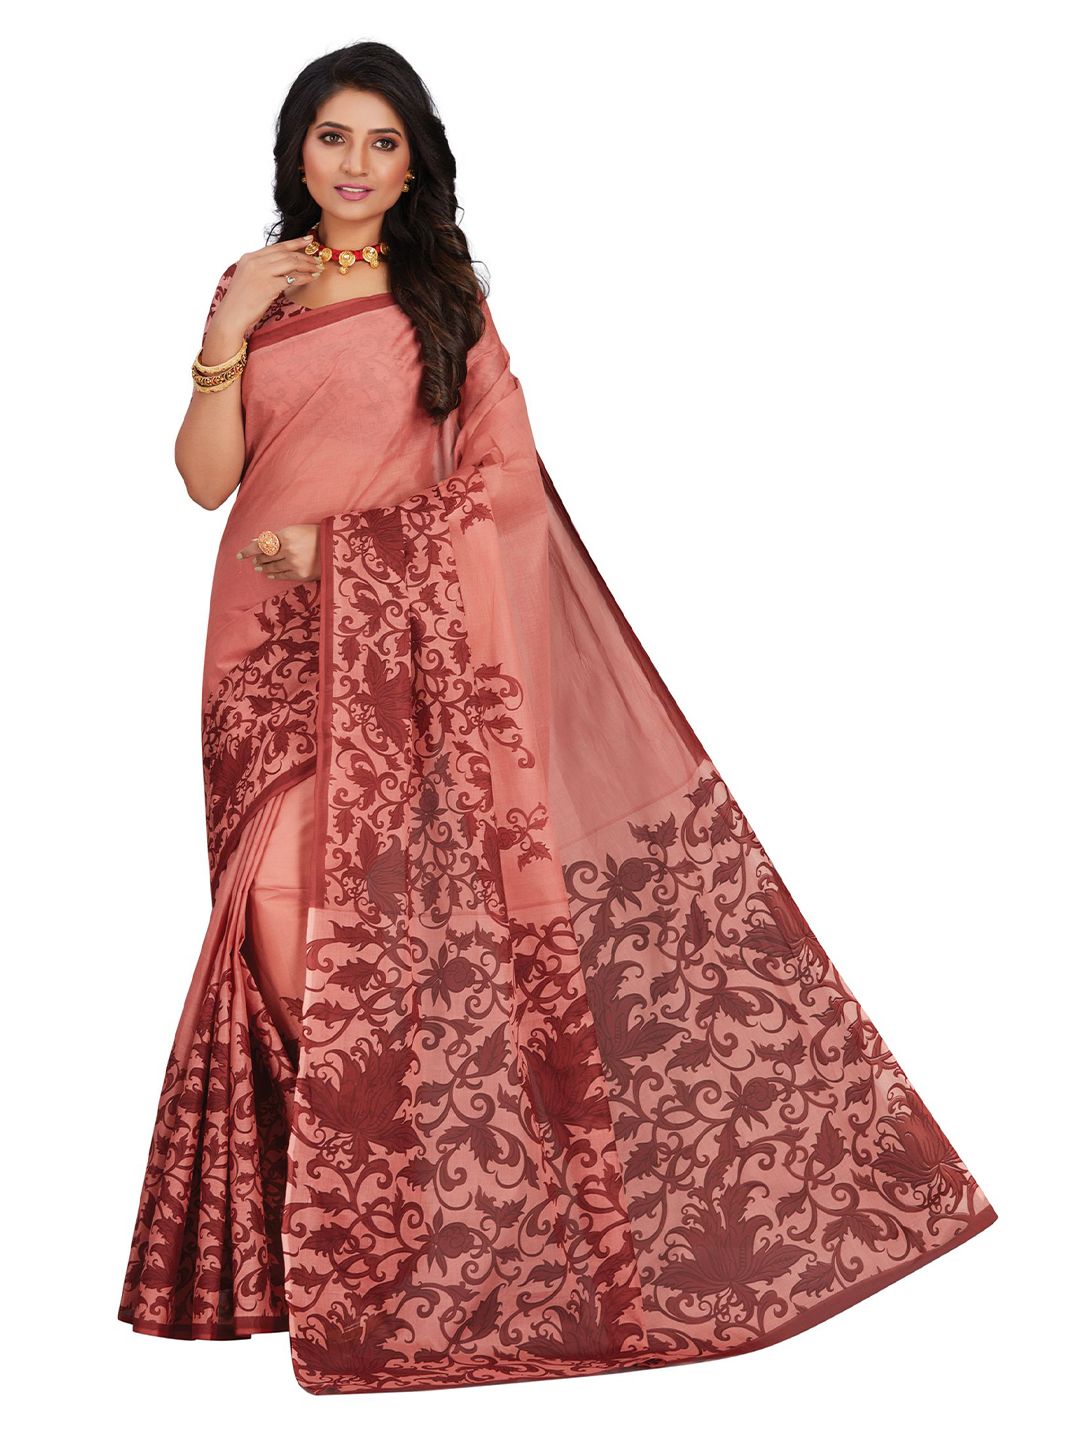 SHANVIKA Peach-Coloured & Maroon Floral Printed Pure Cotton Saree Price in India